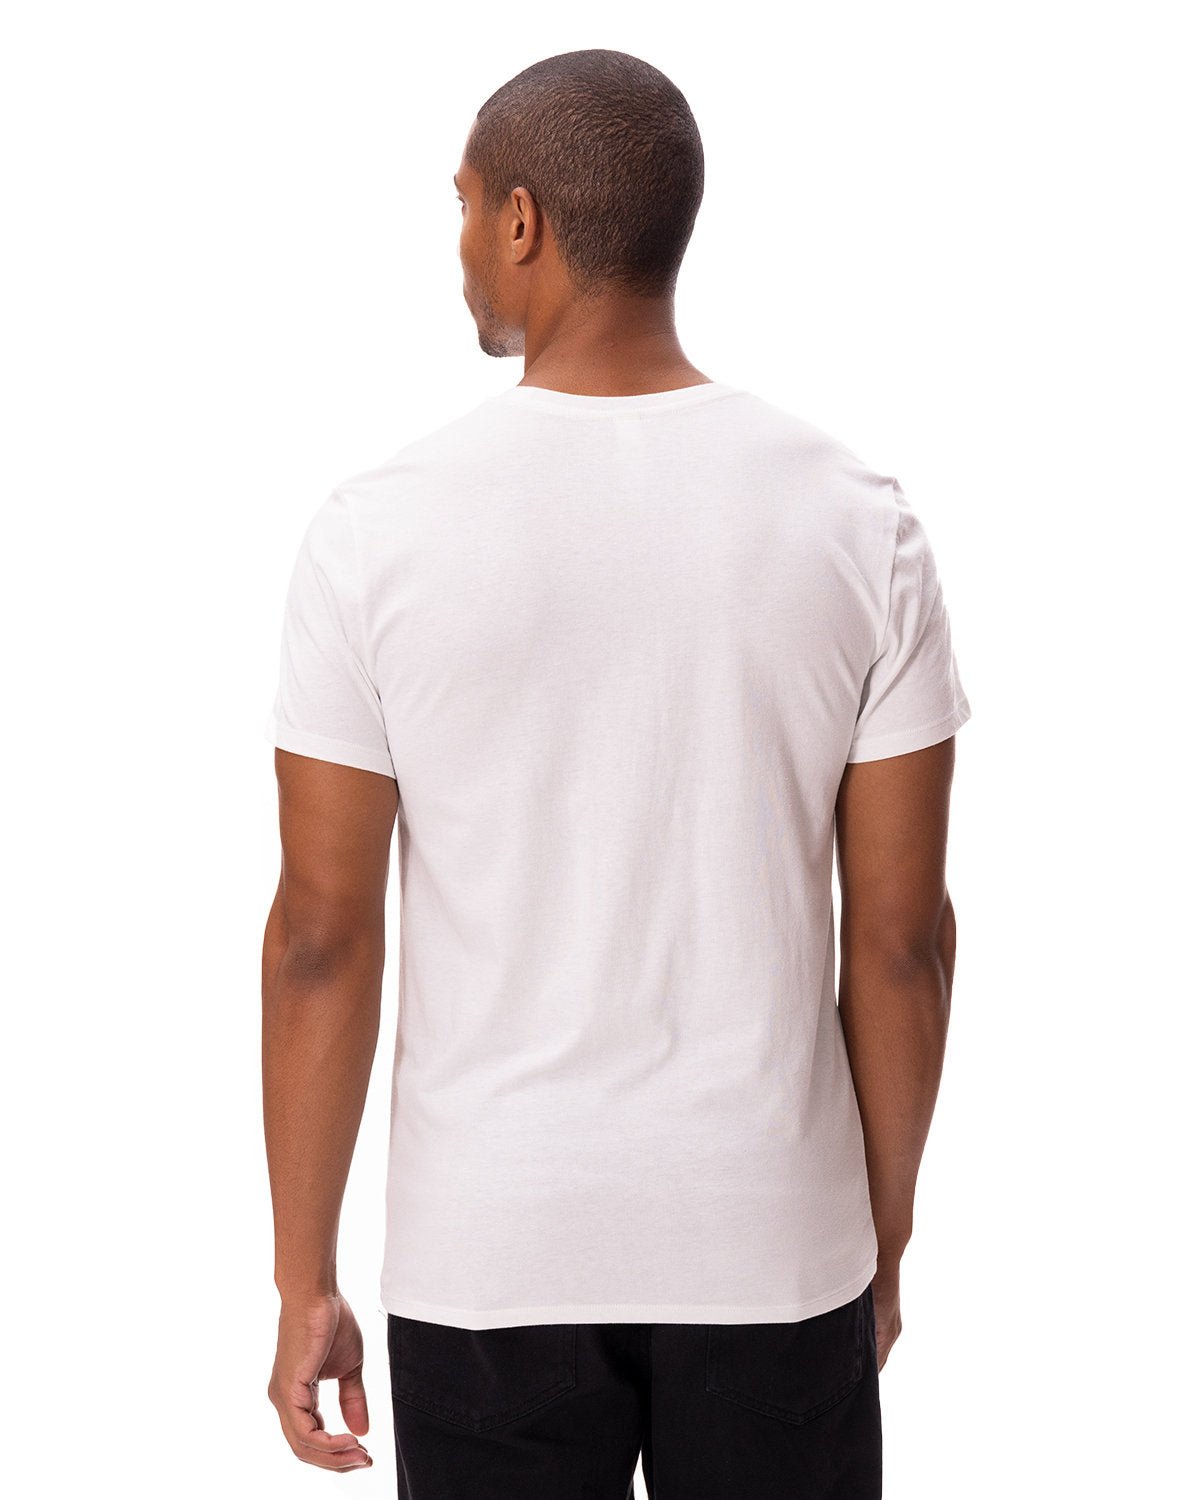 180A-Threadfast Apparel-WHITE NFC-Threadfast Apparel-T-Shirts-2